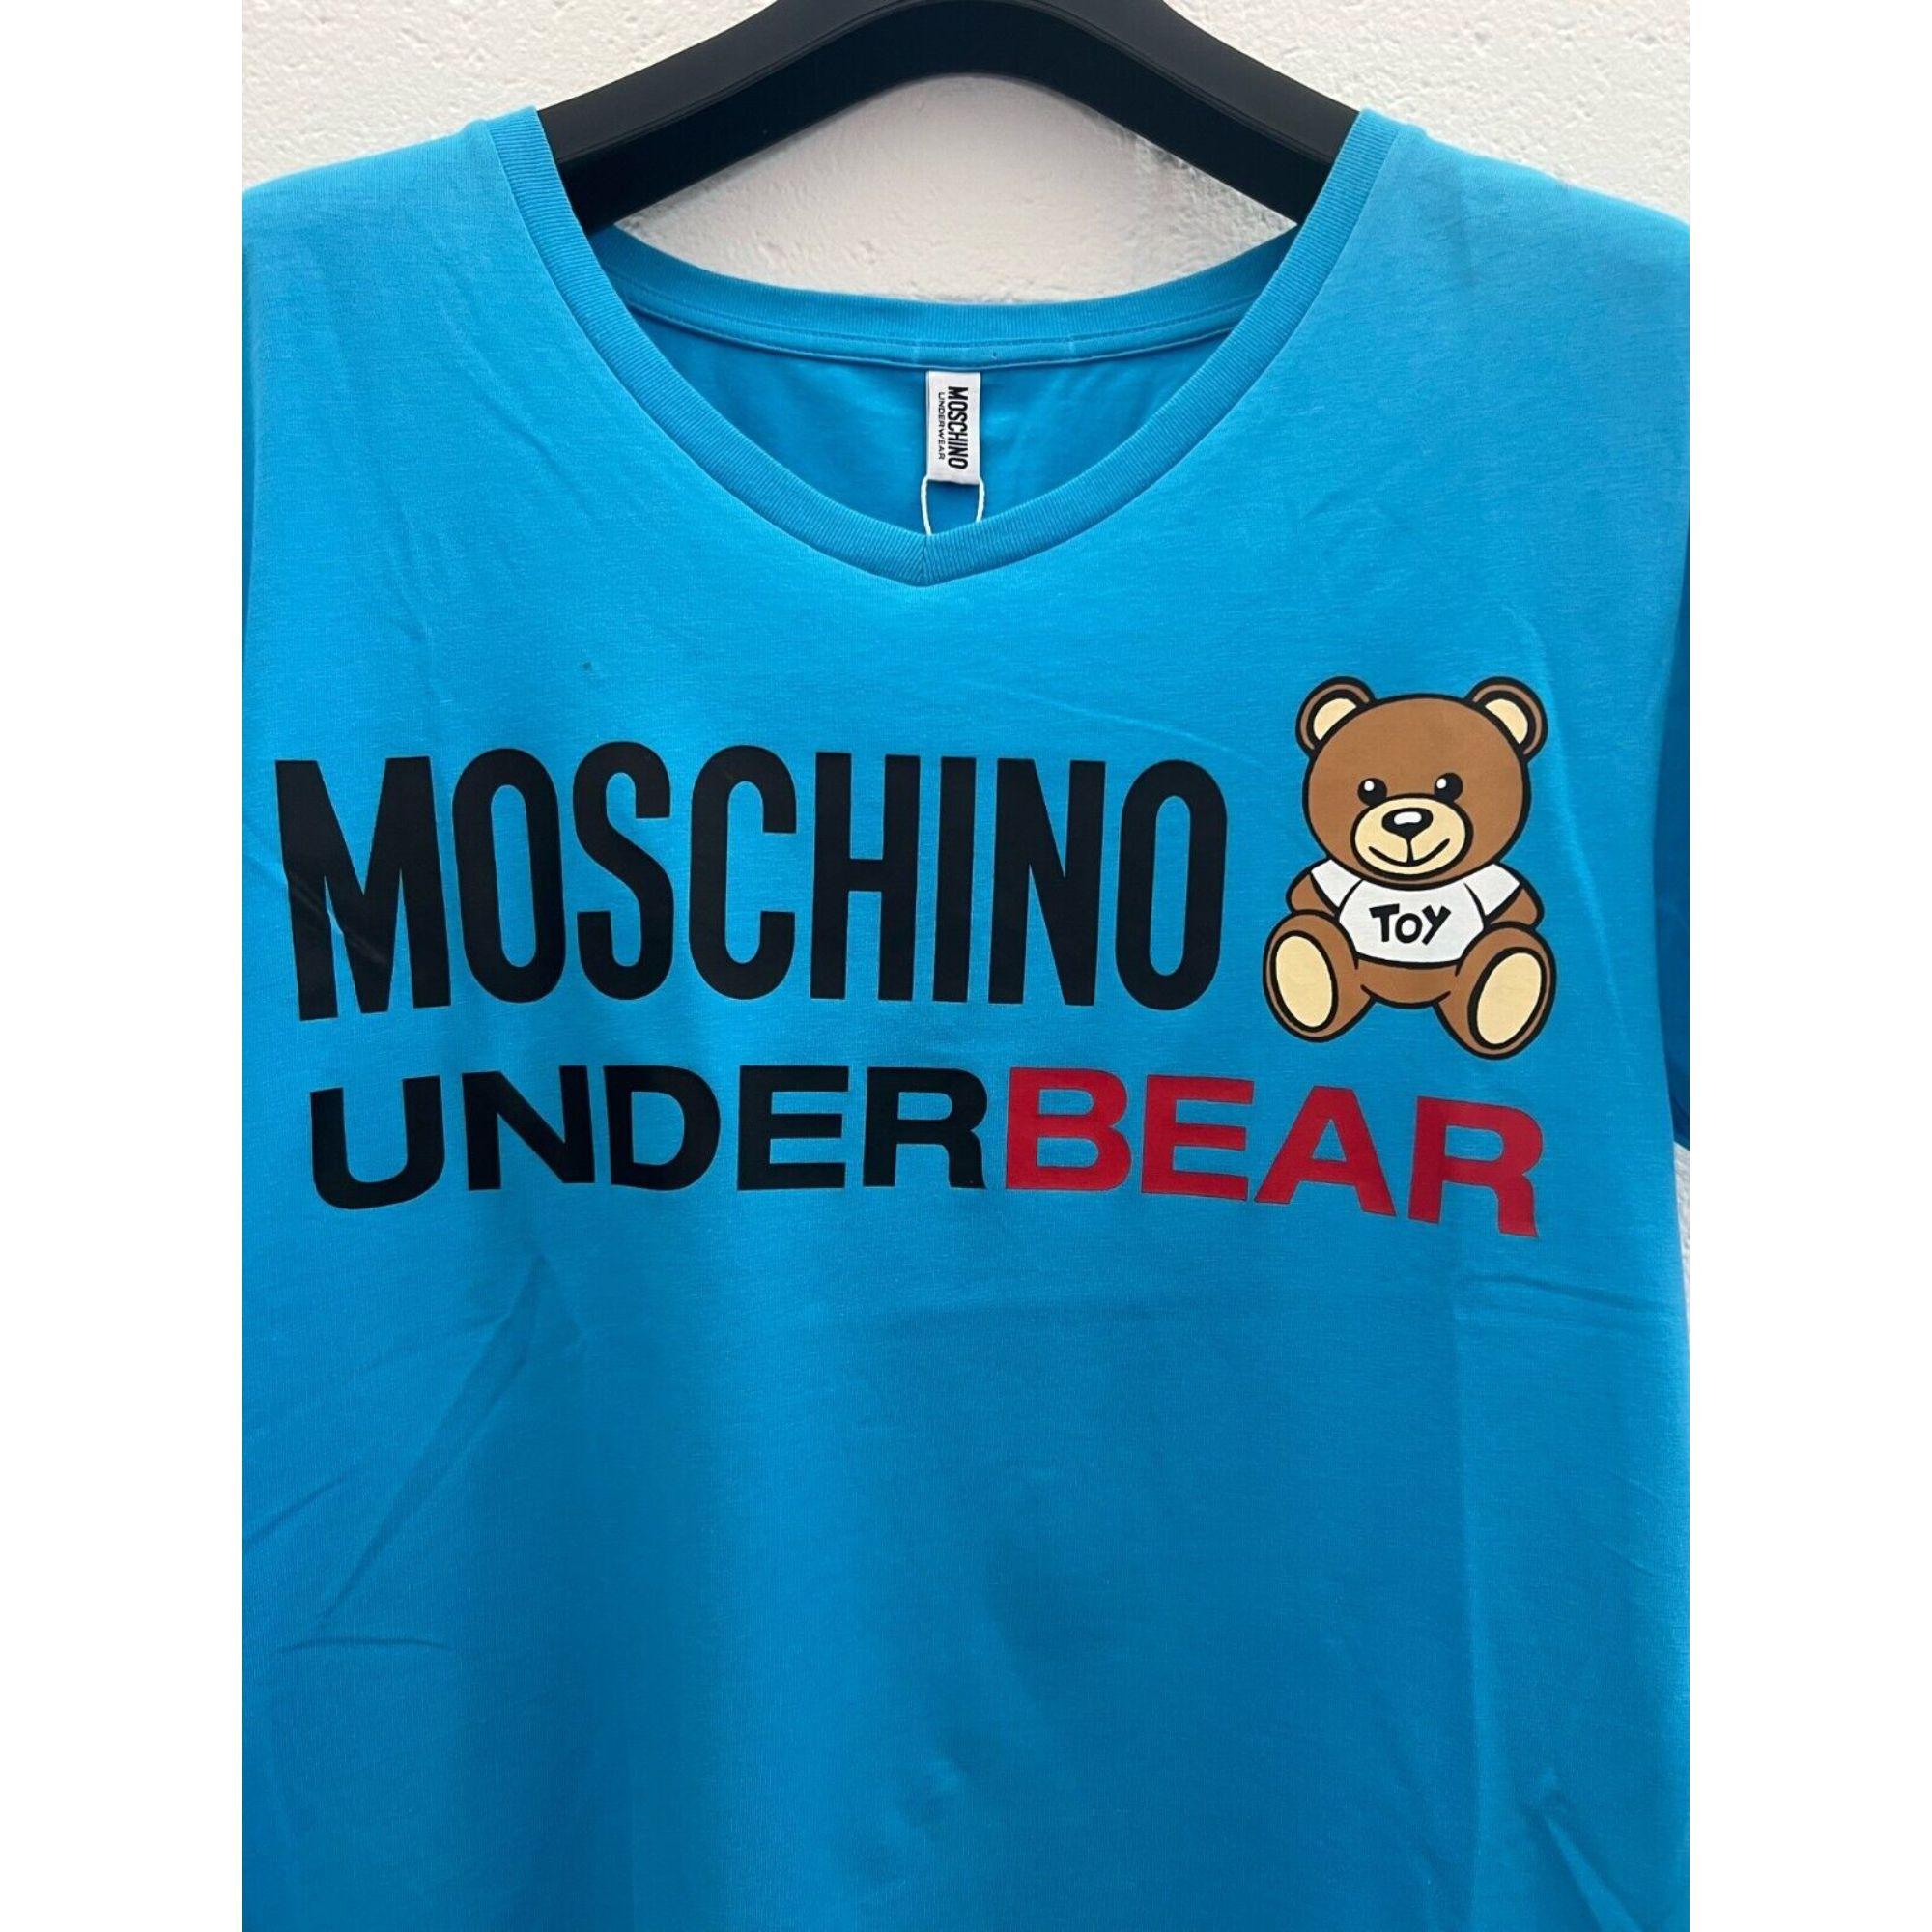 Blue SS20 Moschino Underwear Underbear Teddy Bear T-shirt by Jeremy Scott, Size S For Sale